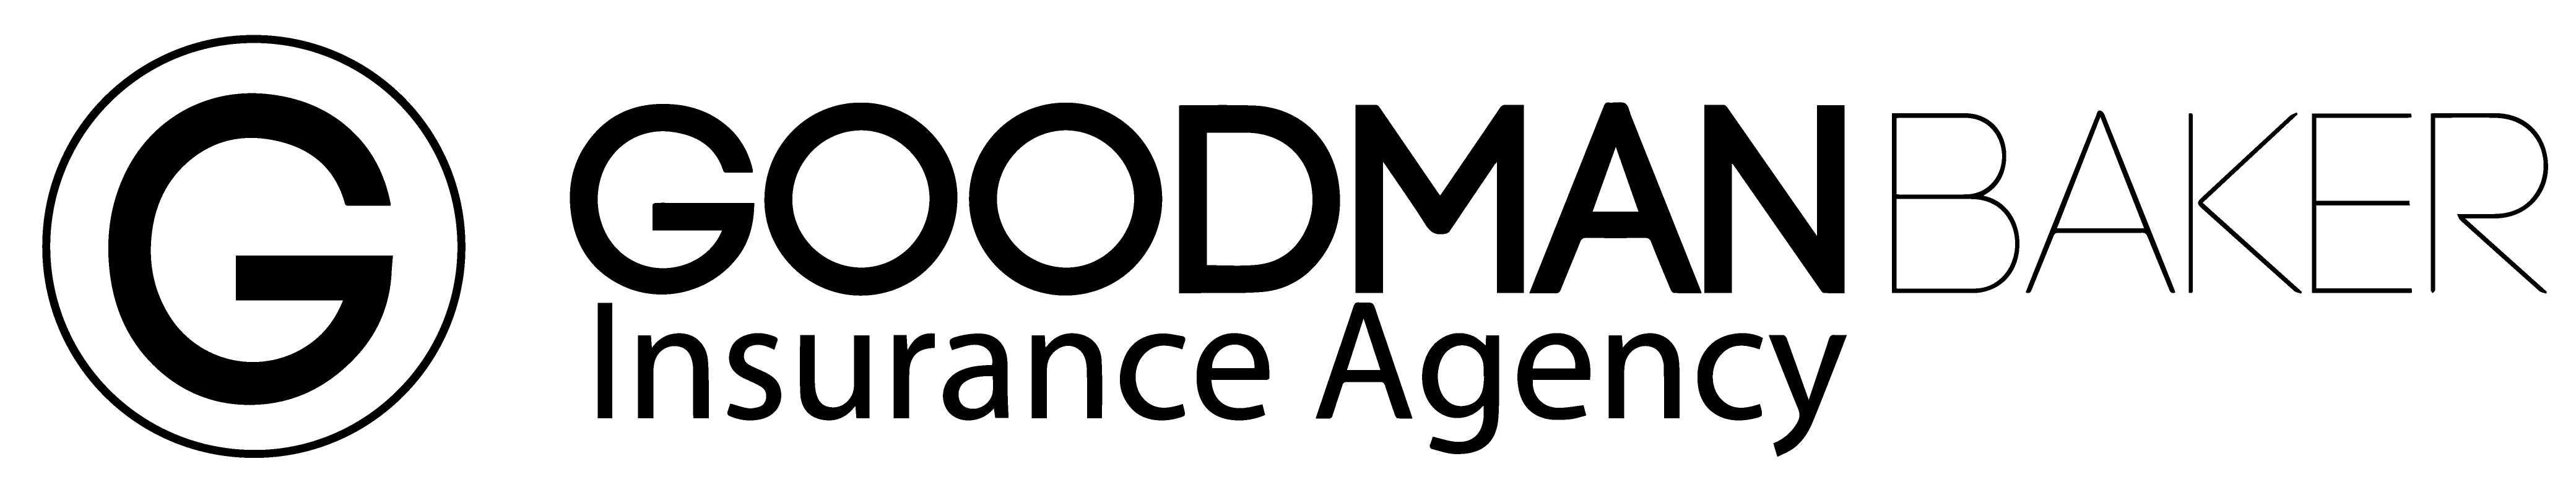 Goodman Baker Insurance Agency Logo Black Text